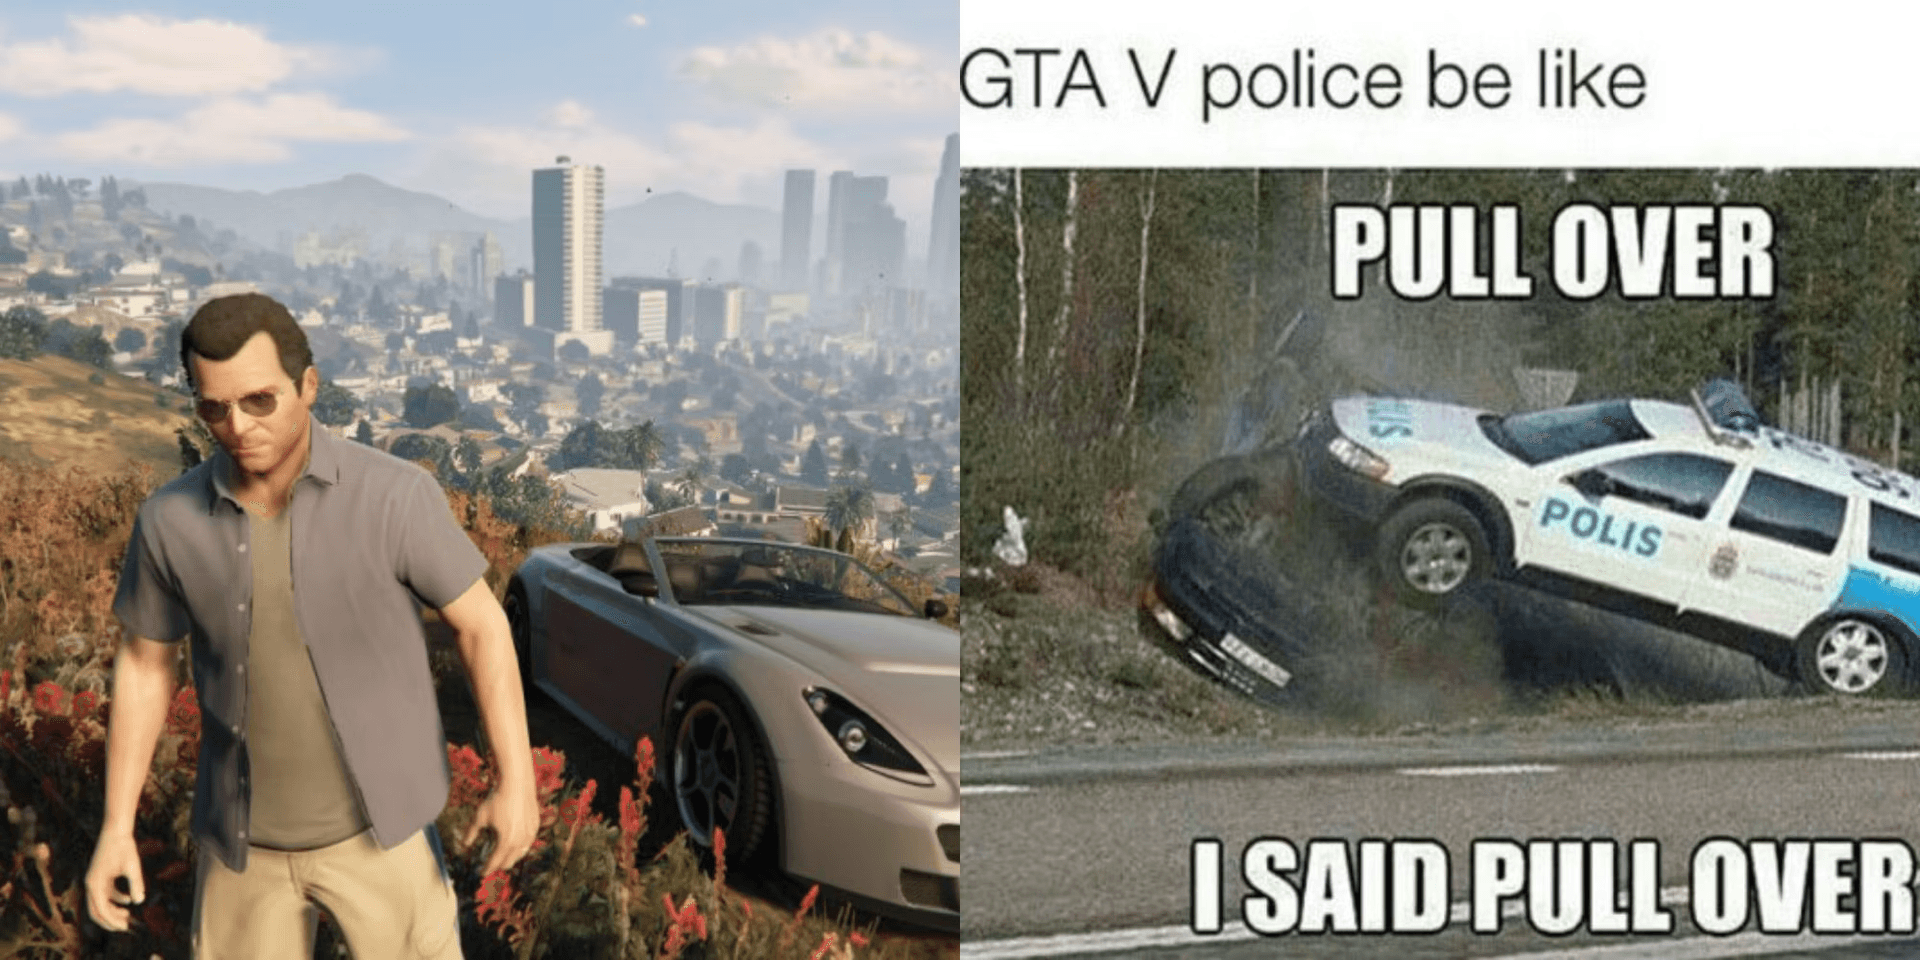 GTA V police be like
PULL OVER
- POLIS
I SAID PULL-OVER